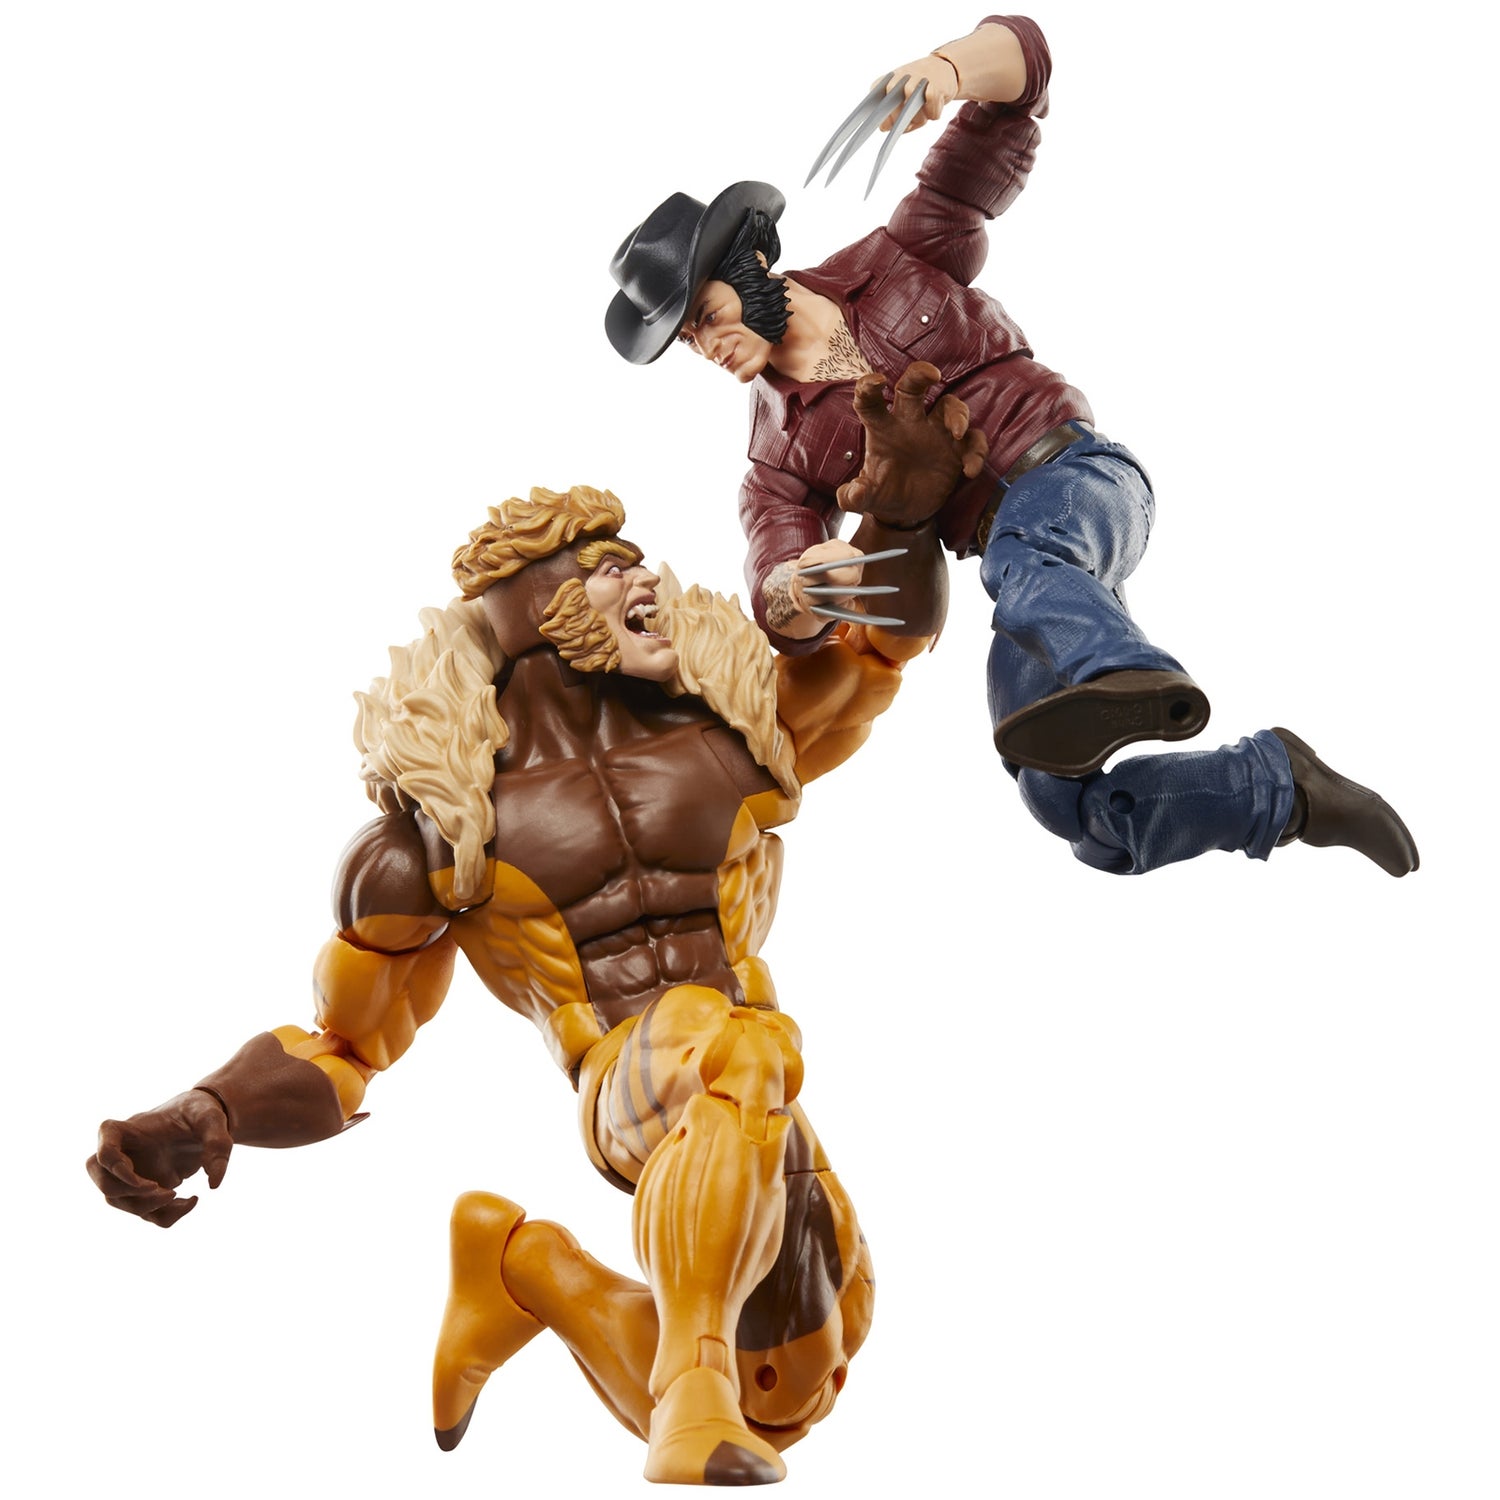 Hasbro Marvel Legends Series Marvel's Logan vs Sabretooth, 6" Comics Collectible Action Figures